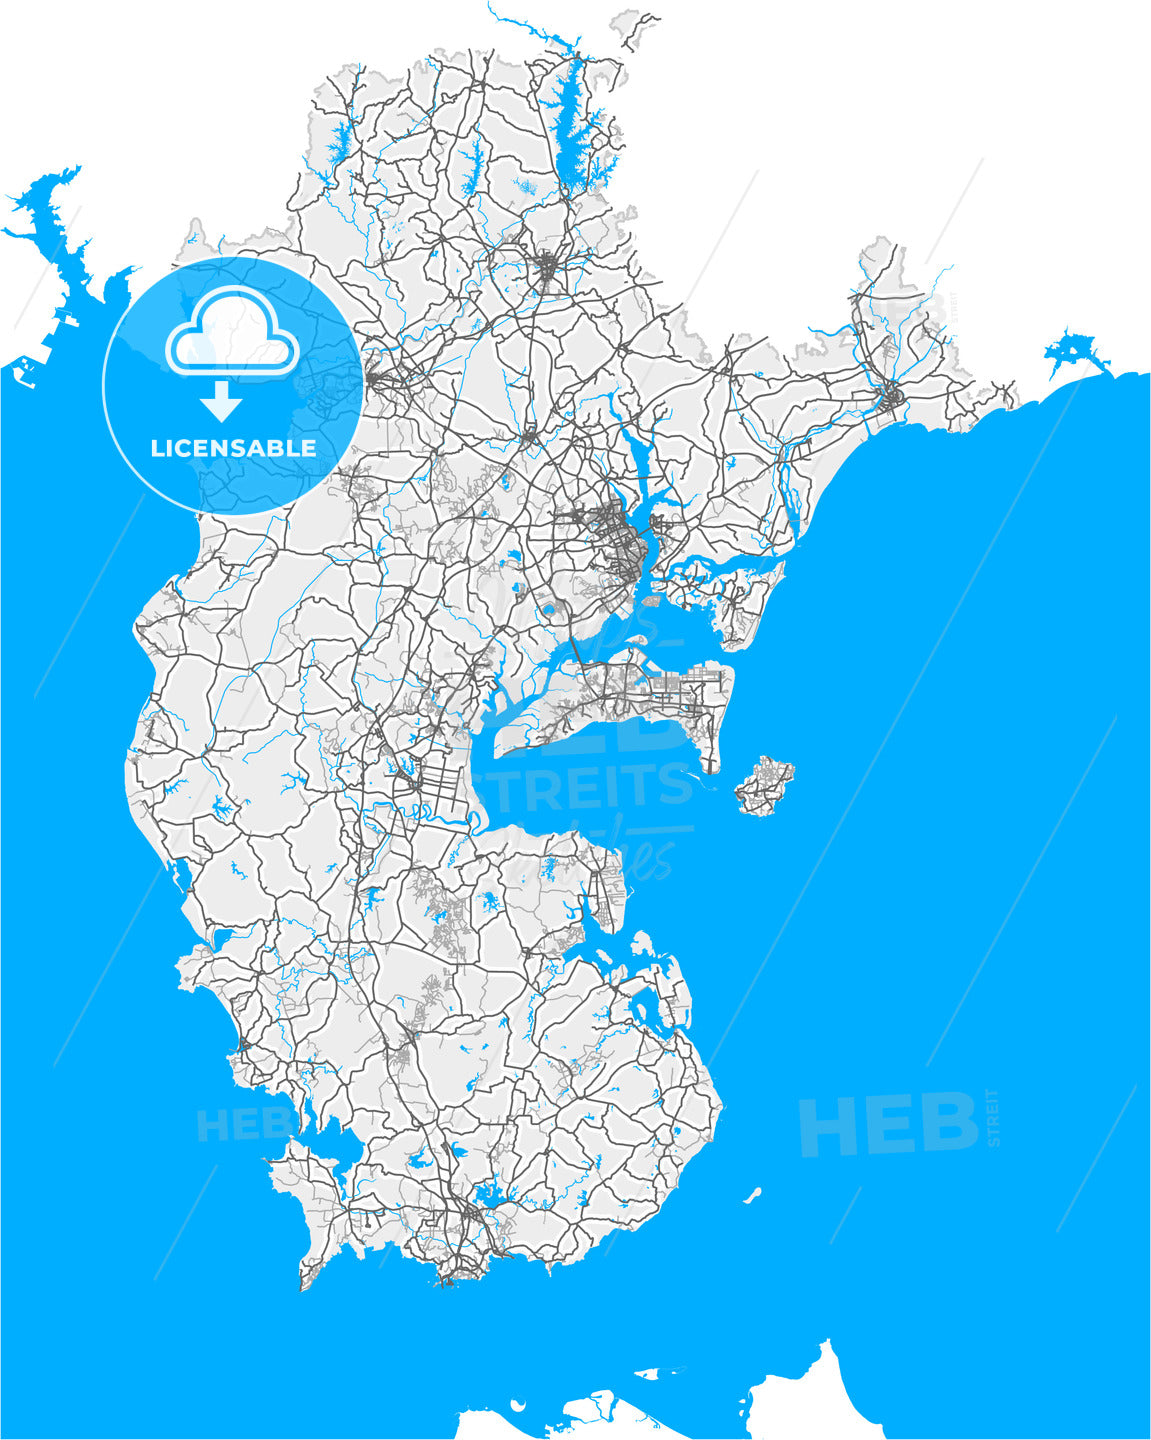 Zhanjiang, Guangdong, China, high quality vector map